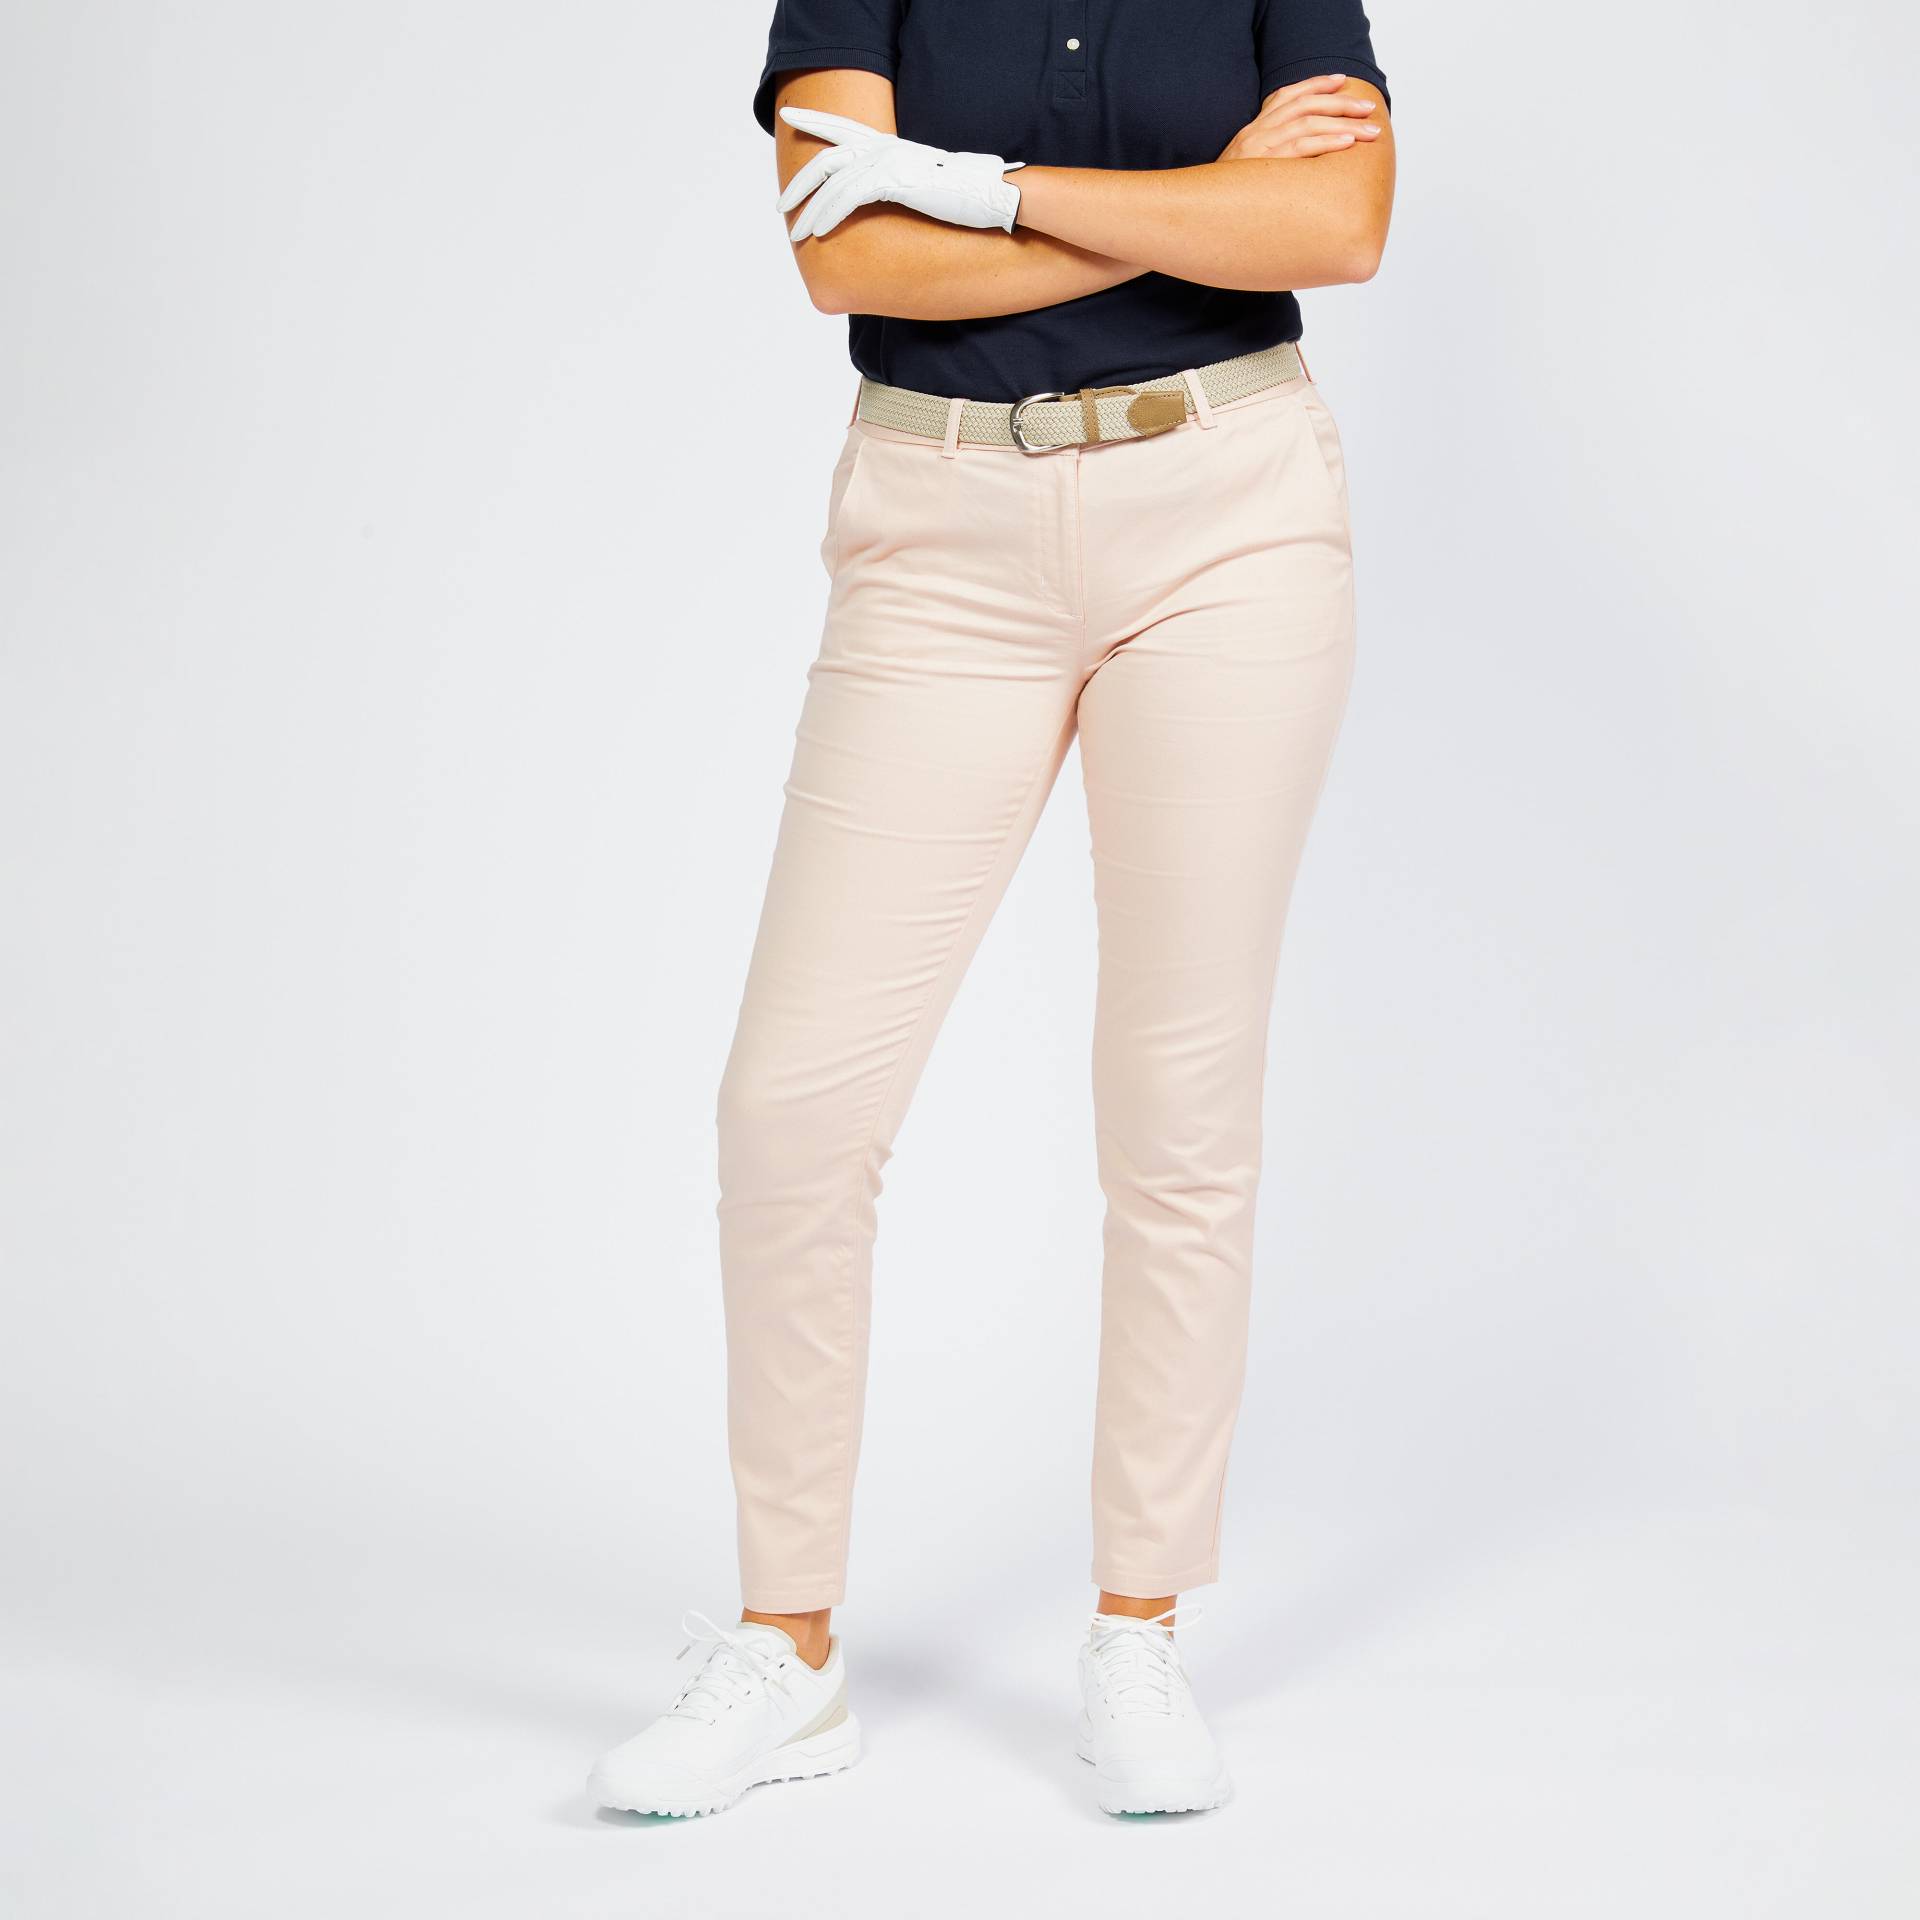 Damen Golfhose - MW500 blassrosa von INESIS